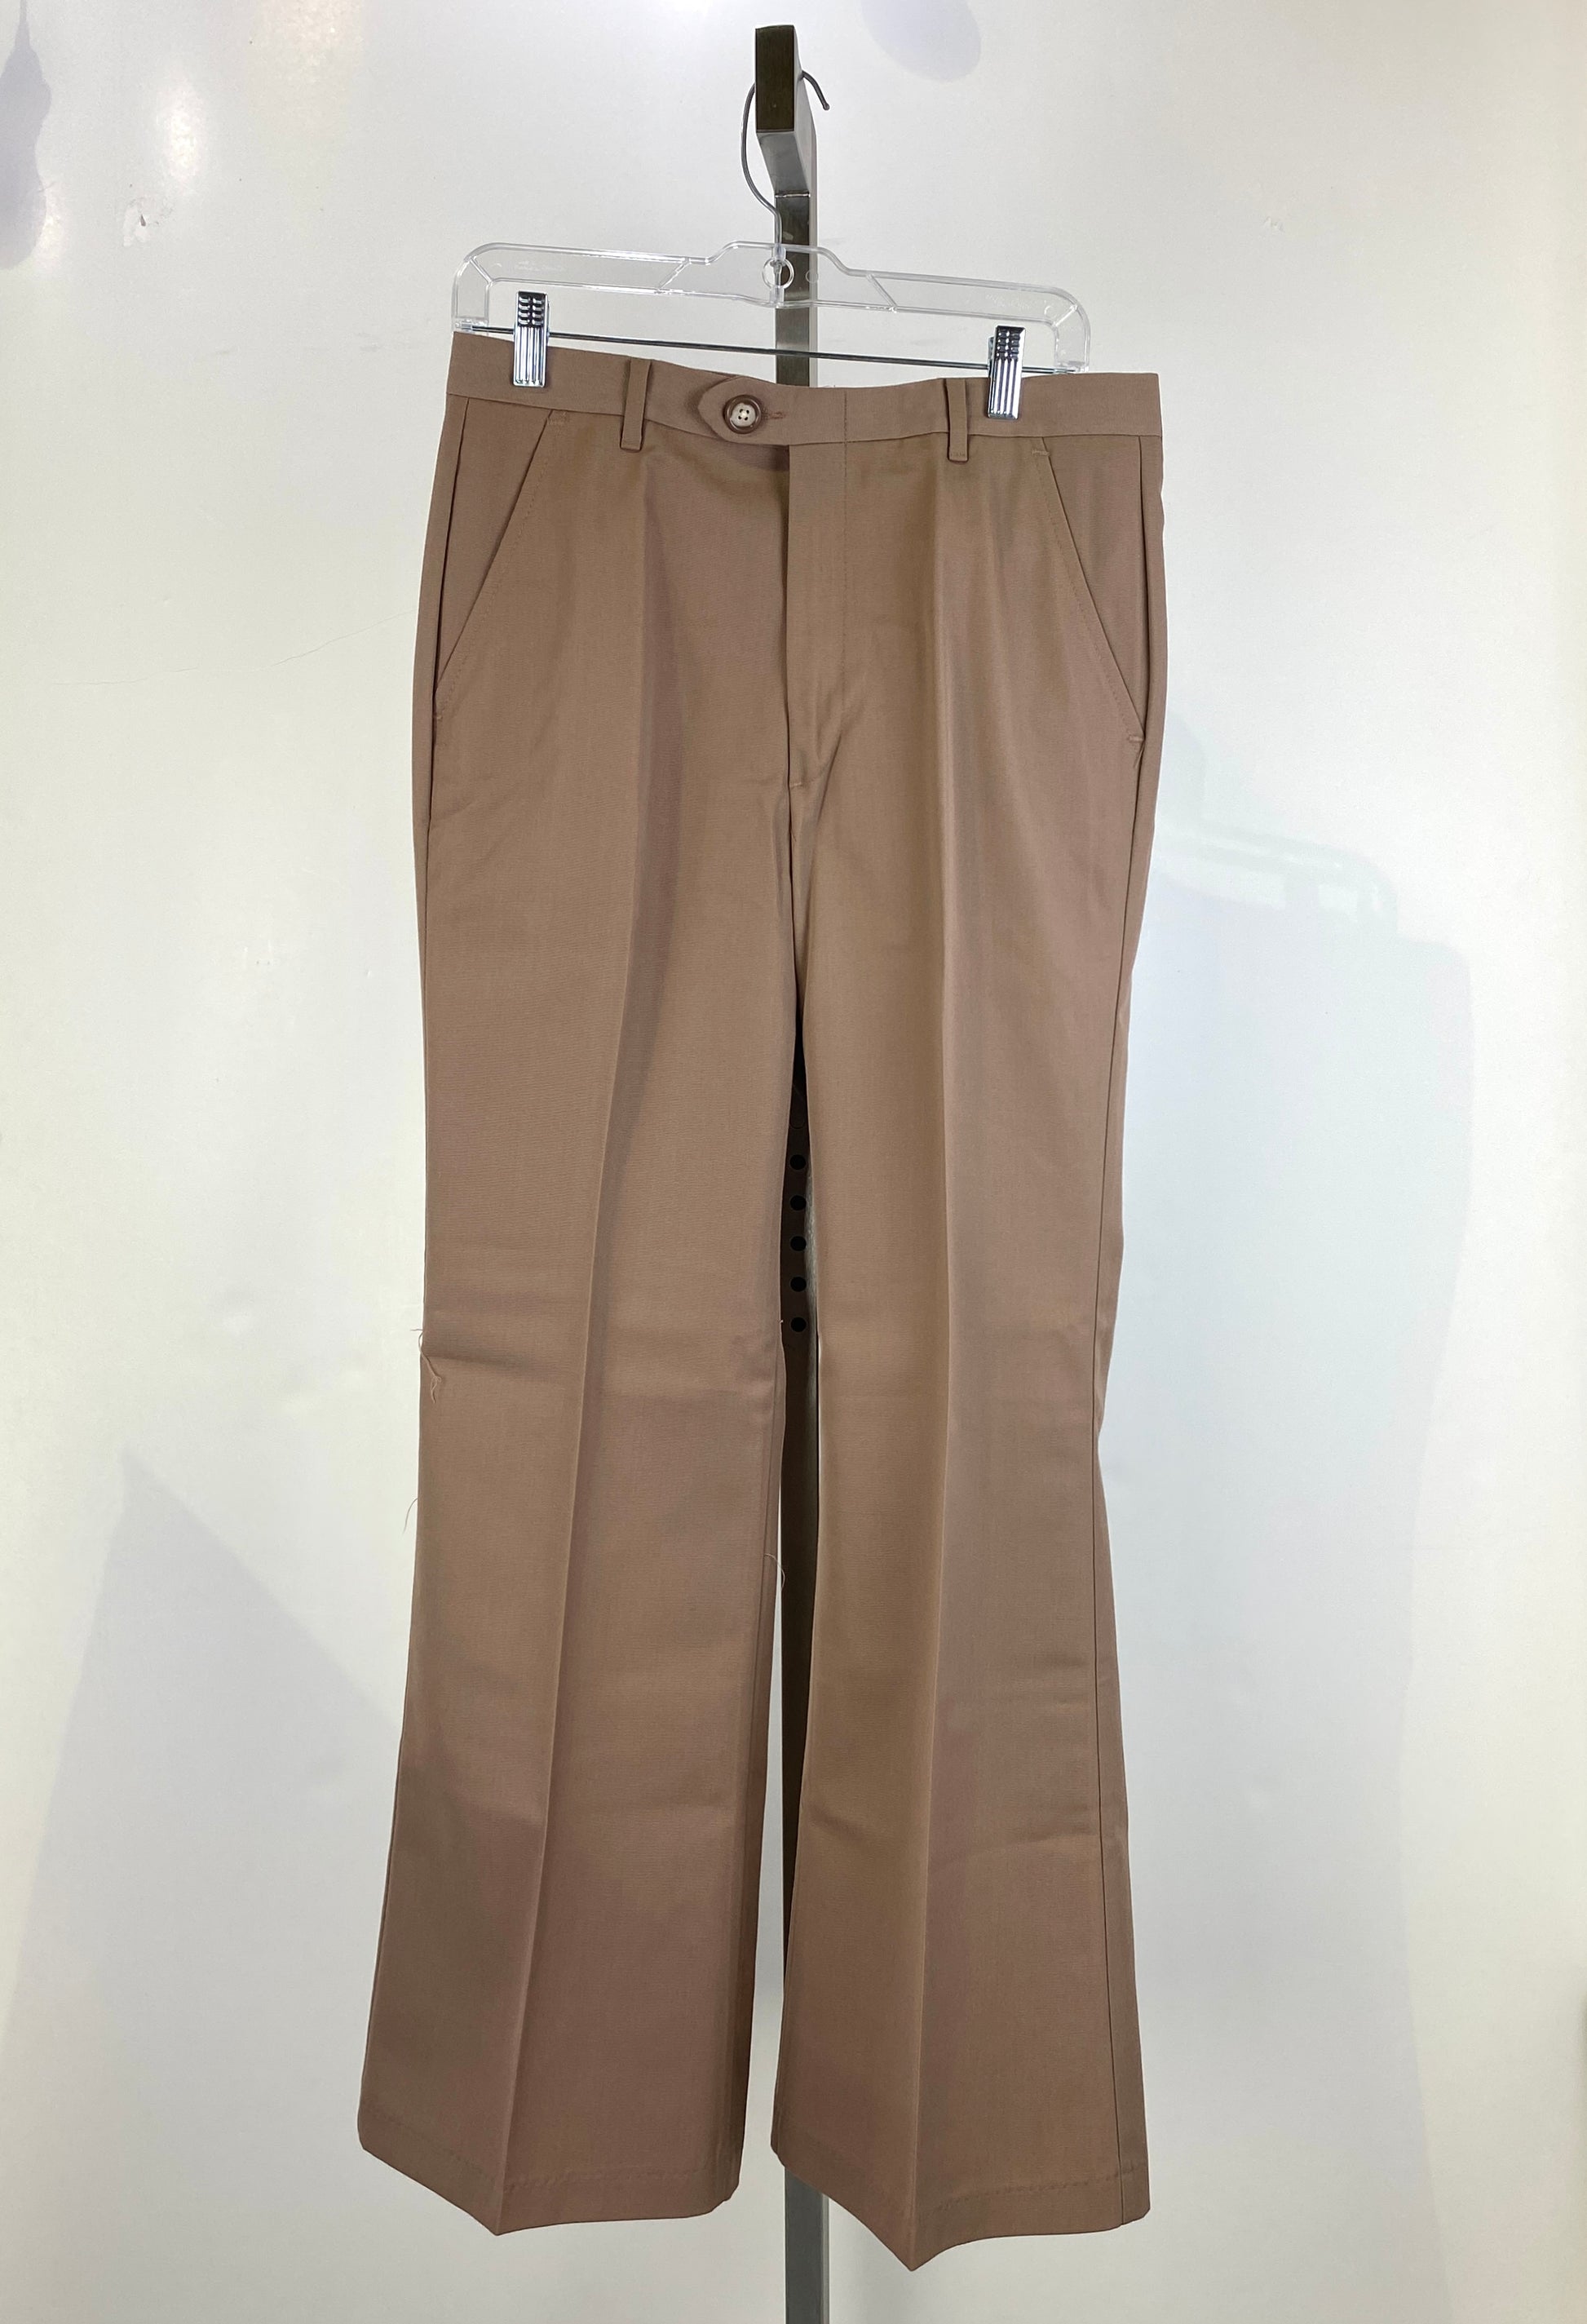 Vintage 1970s Deadstock Flared Poly Trousers, Men's Brown Slacks, NOS